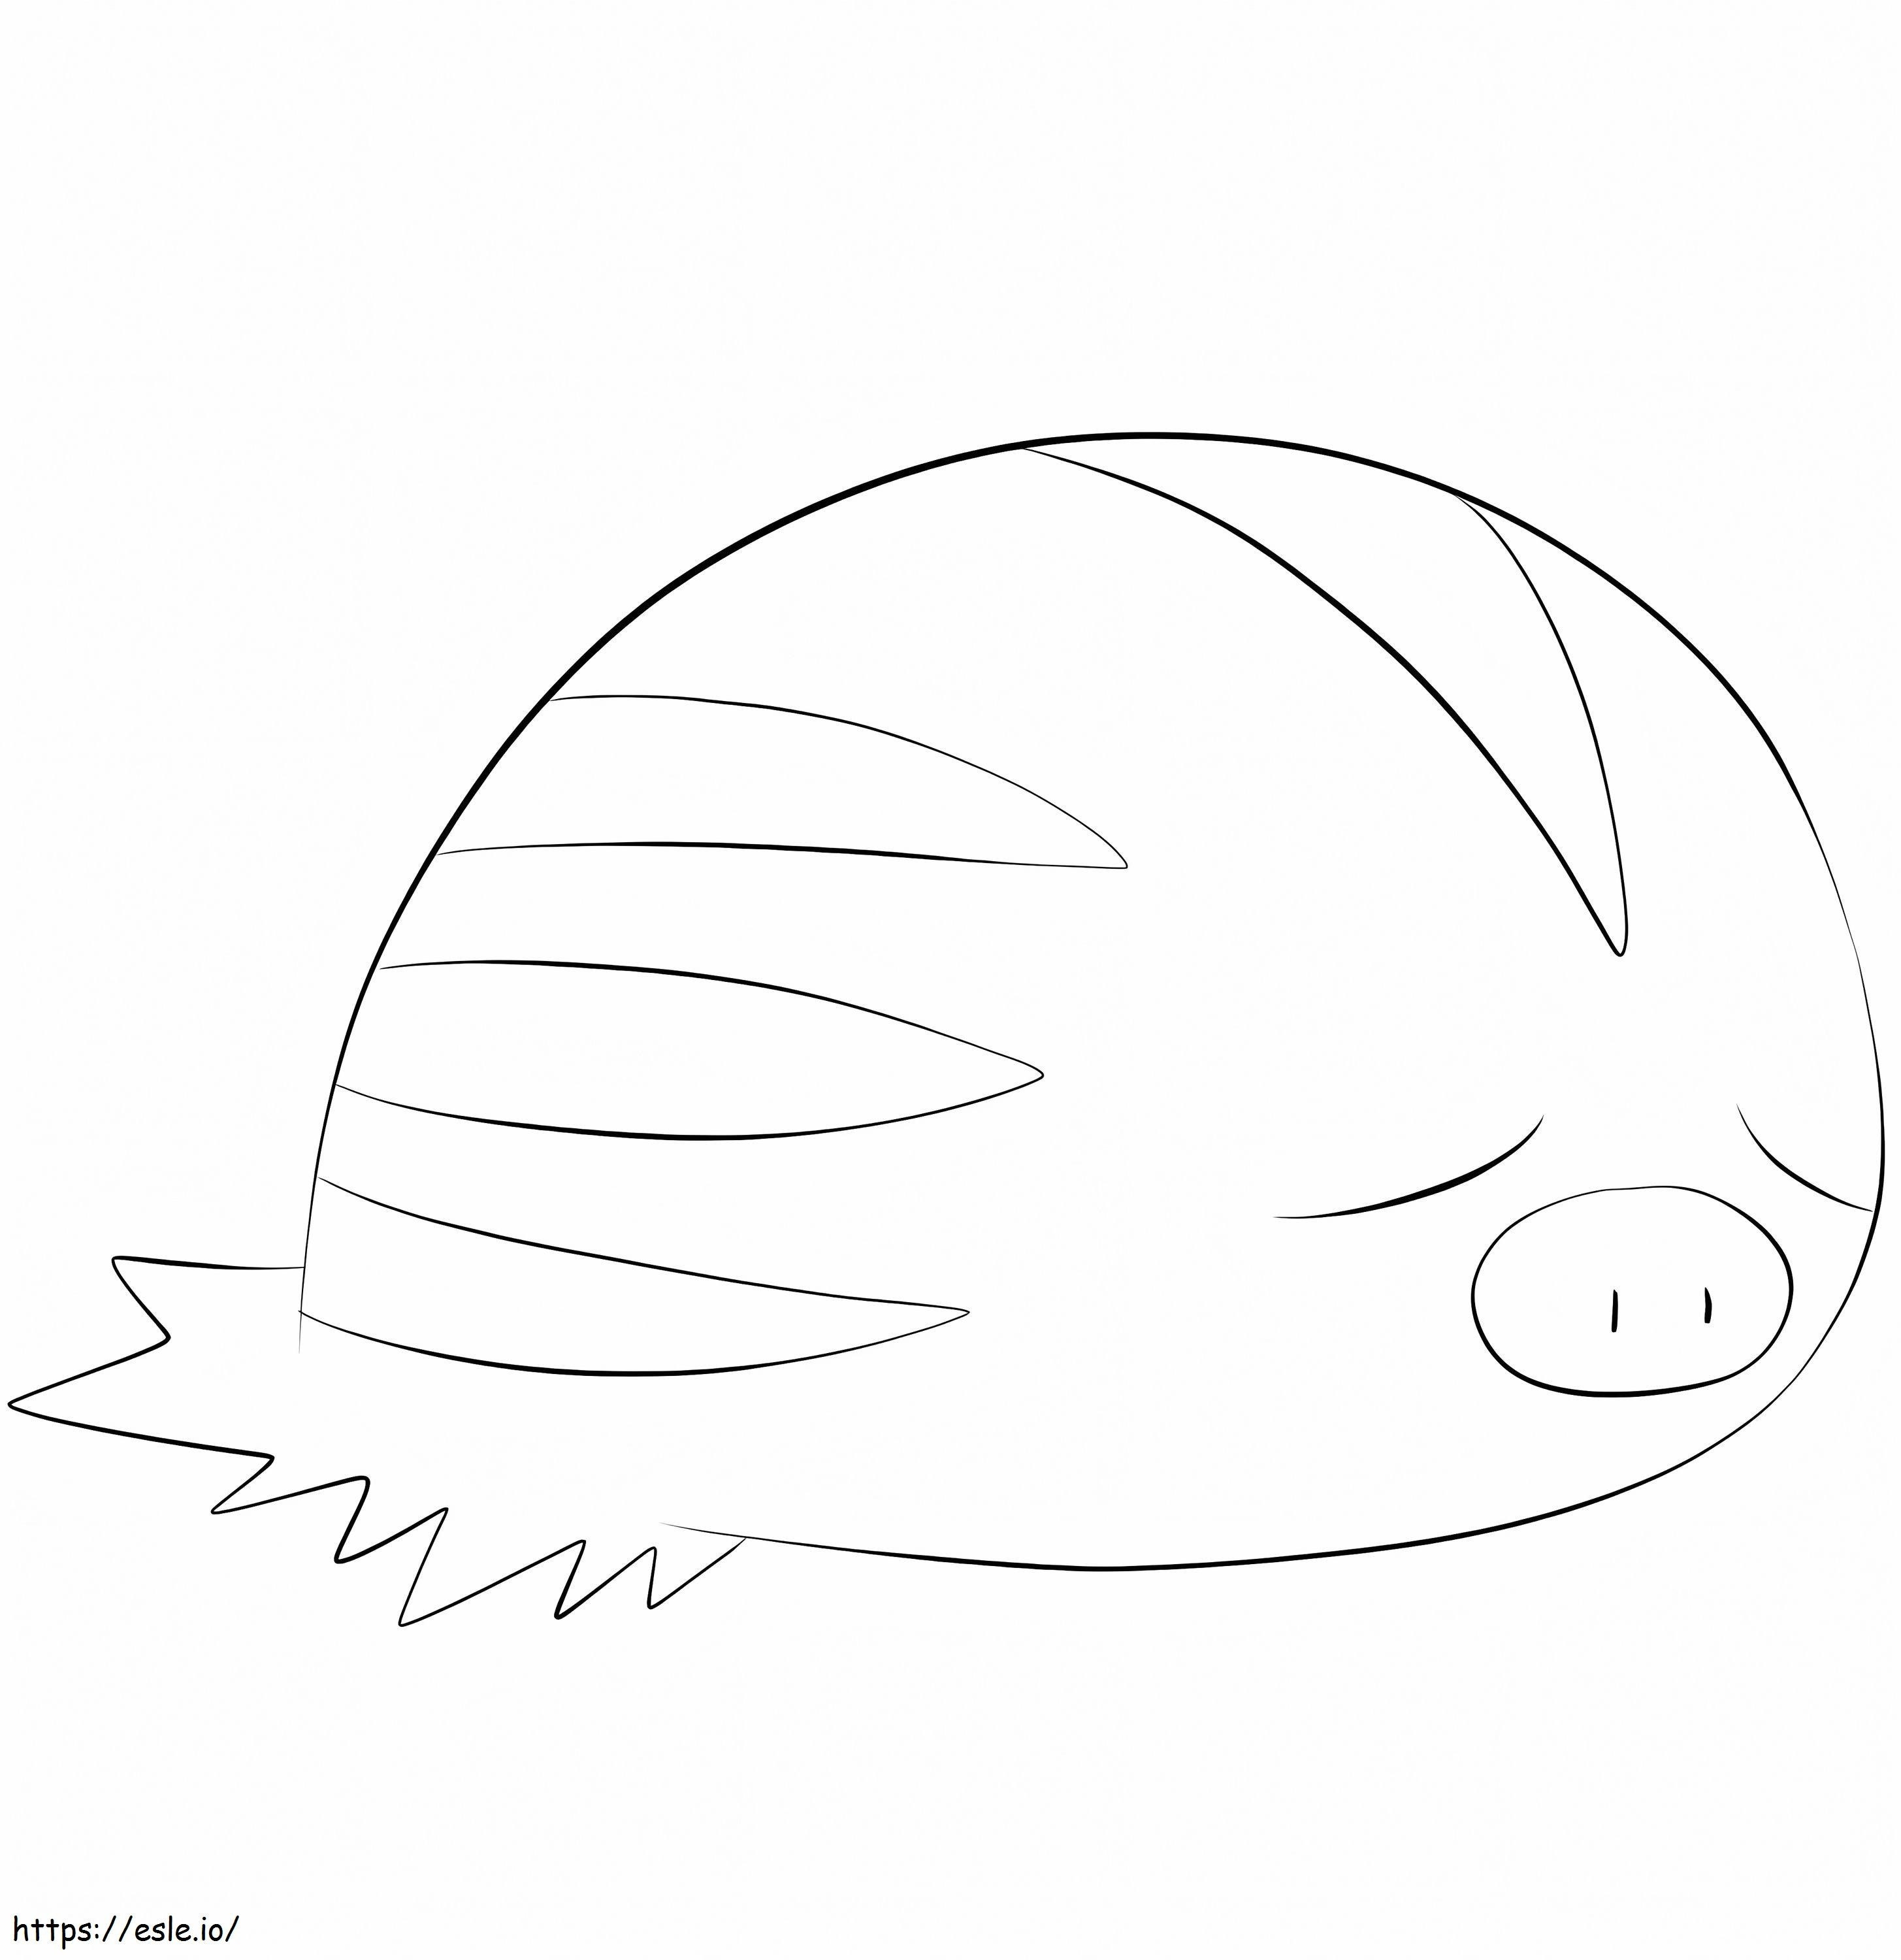 Swinub A Pokemon coloring page